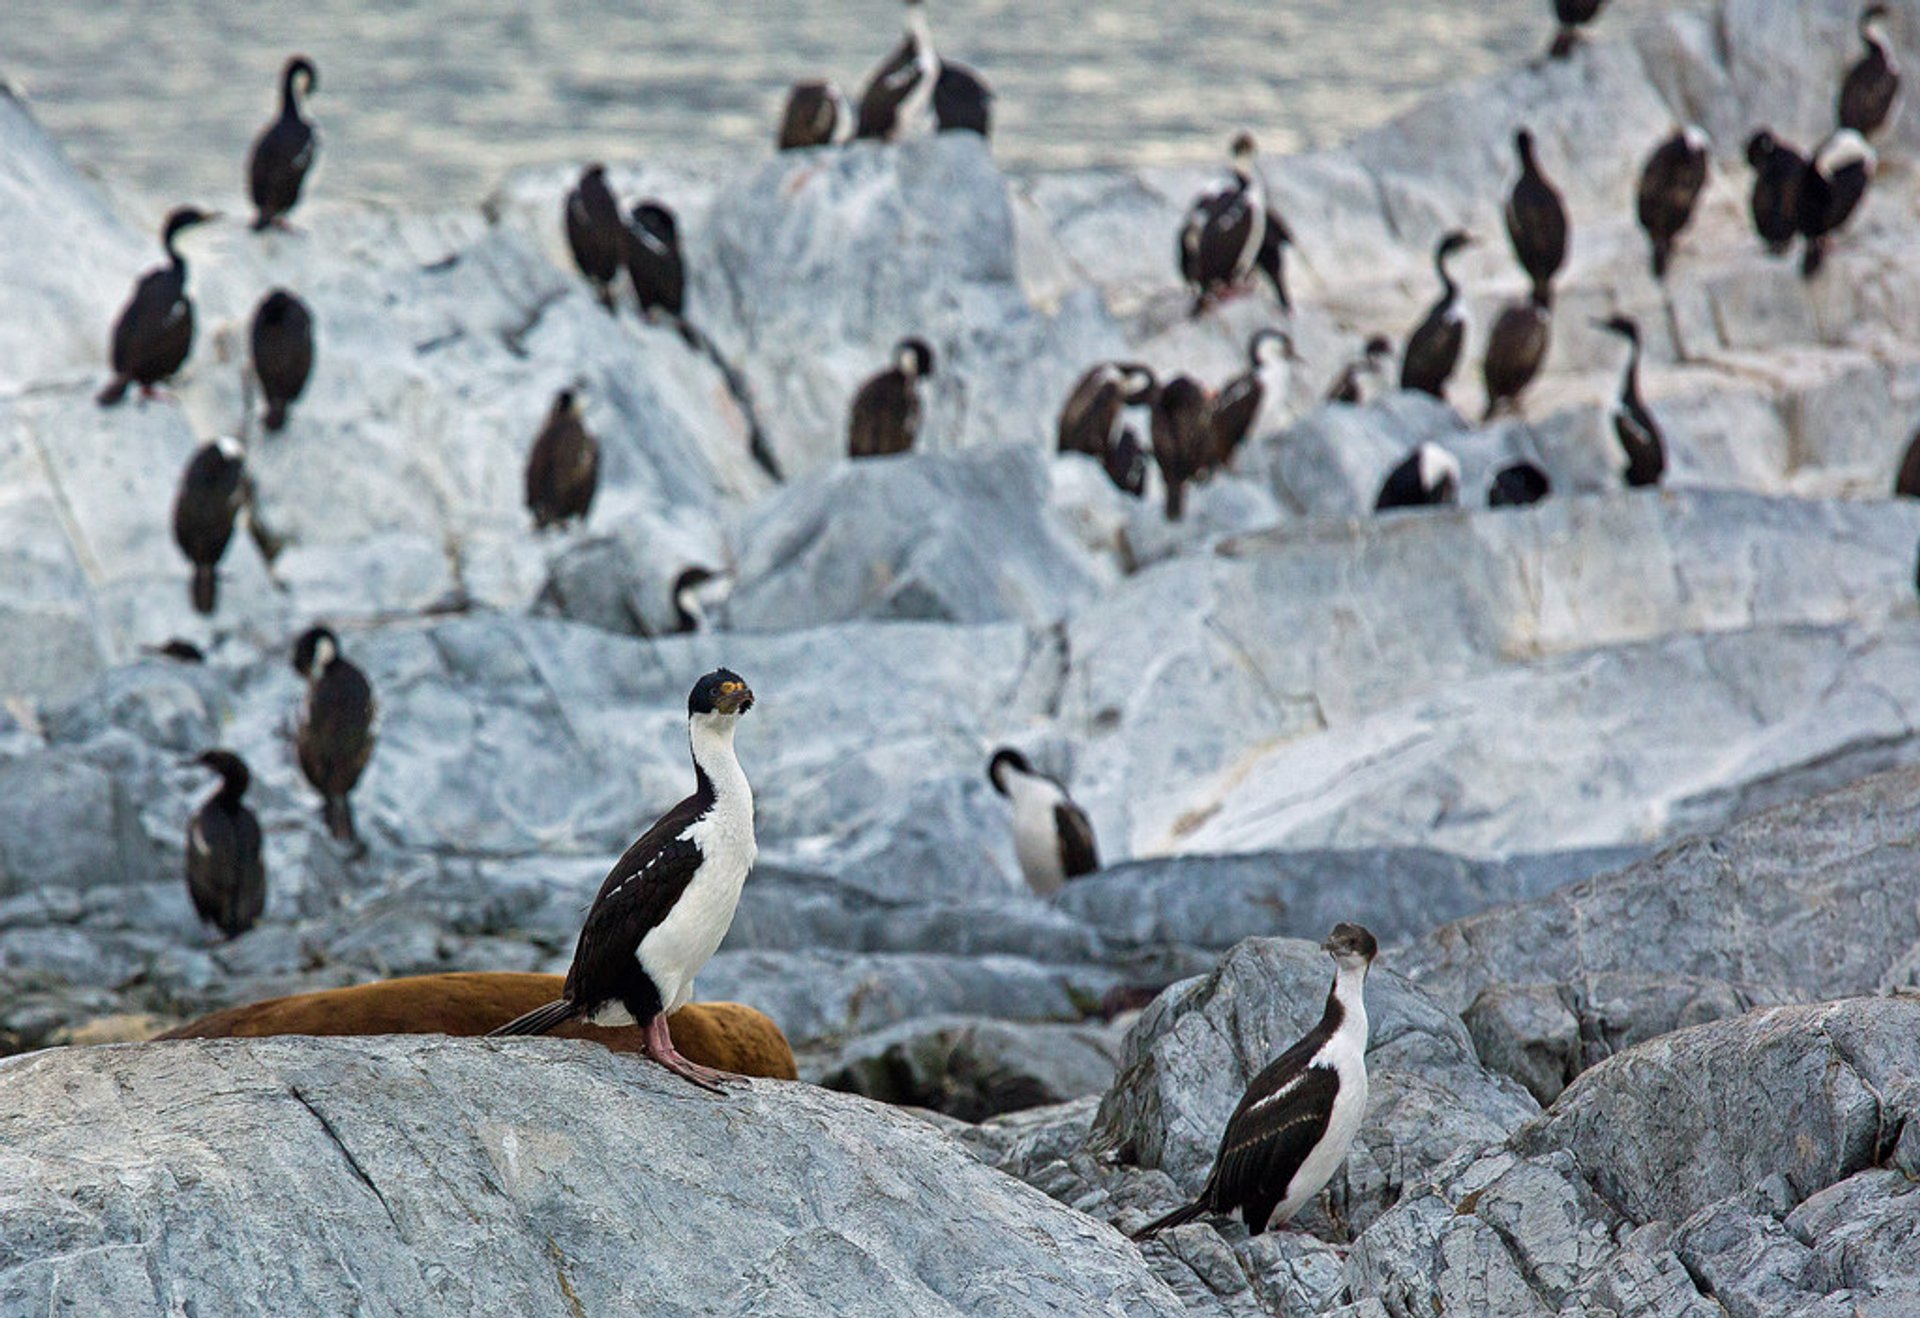 Patagonian Cormorants